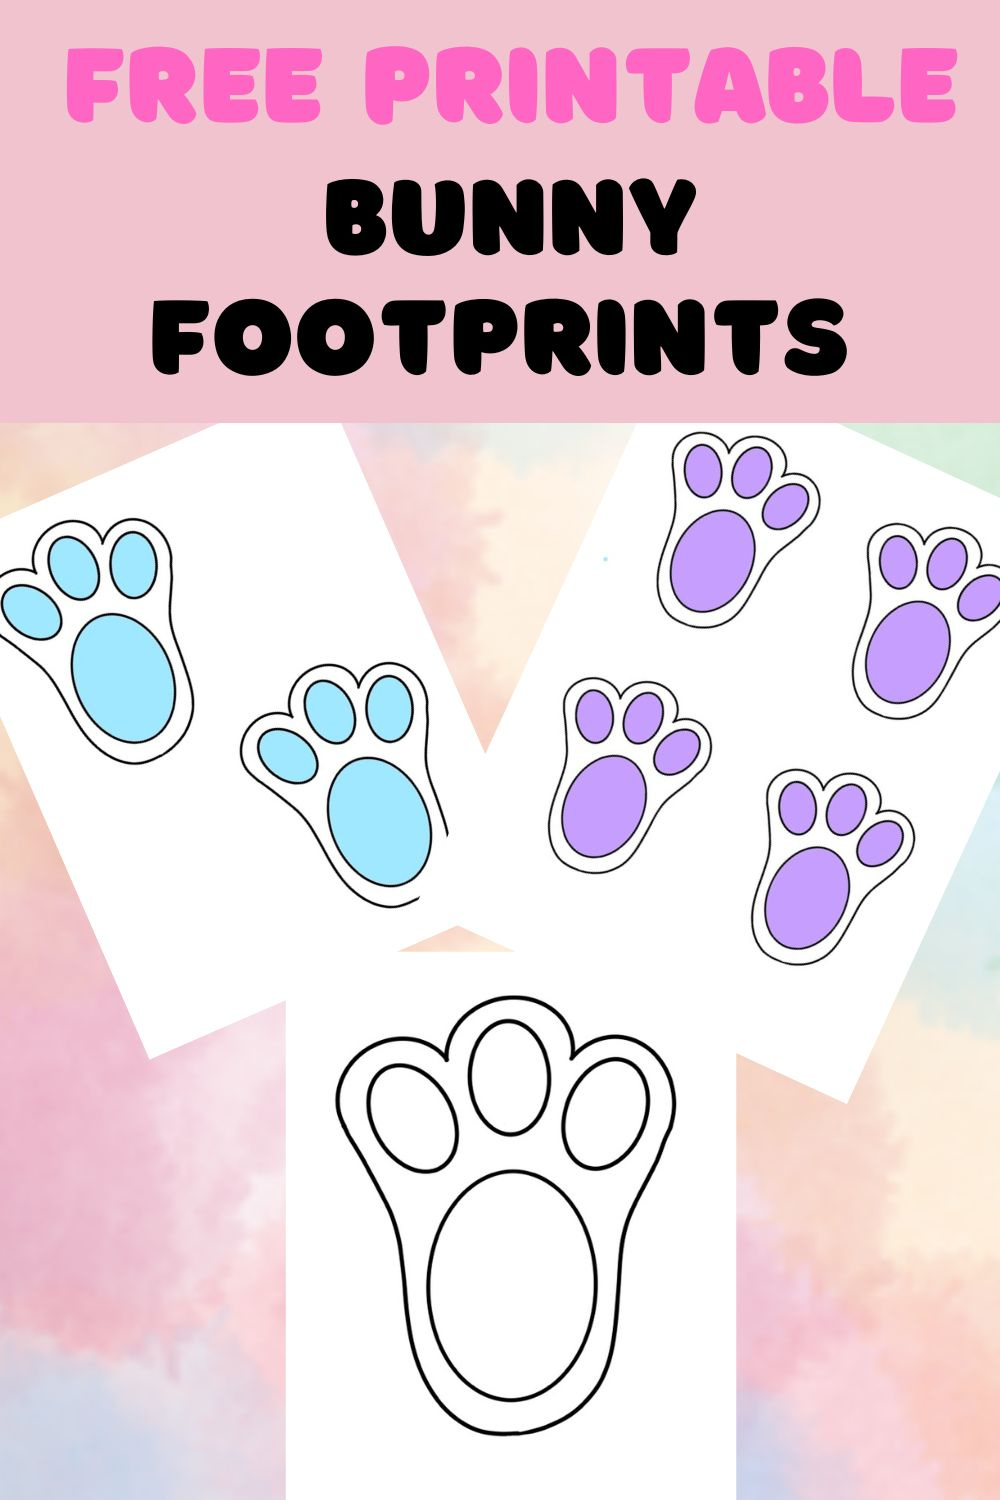 Free Printable Easter Bunny Footprints To Make - intended for Free Printable Footprints